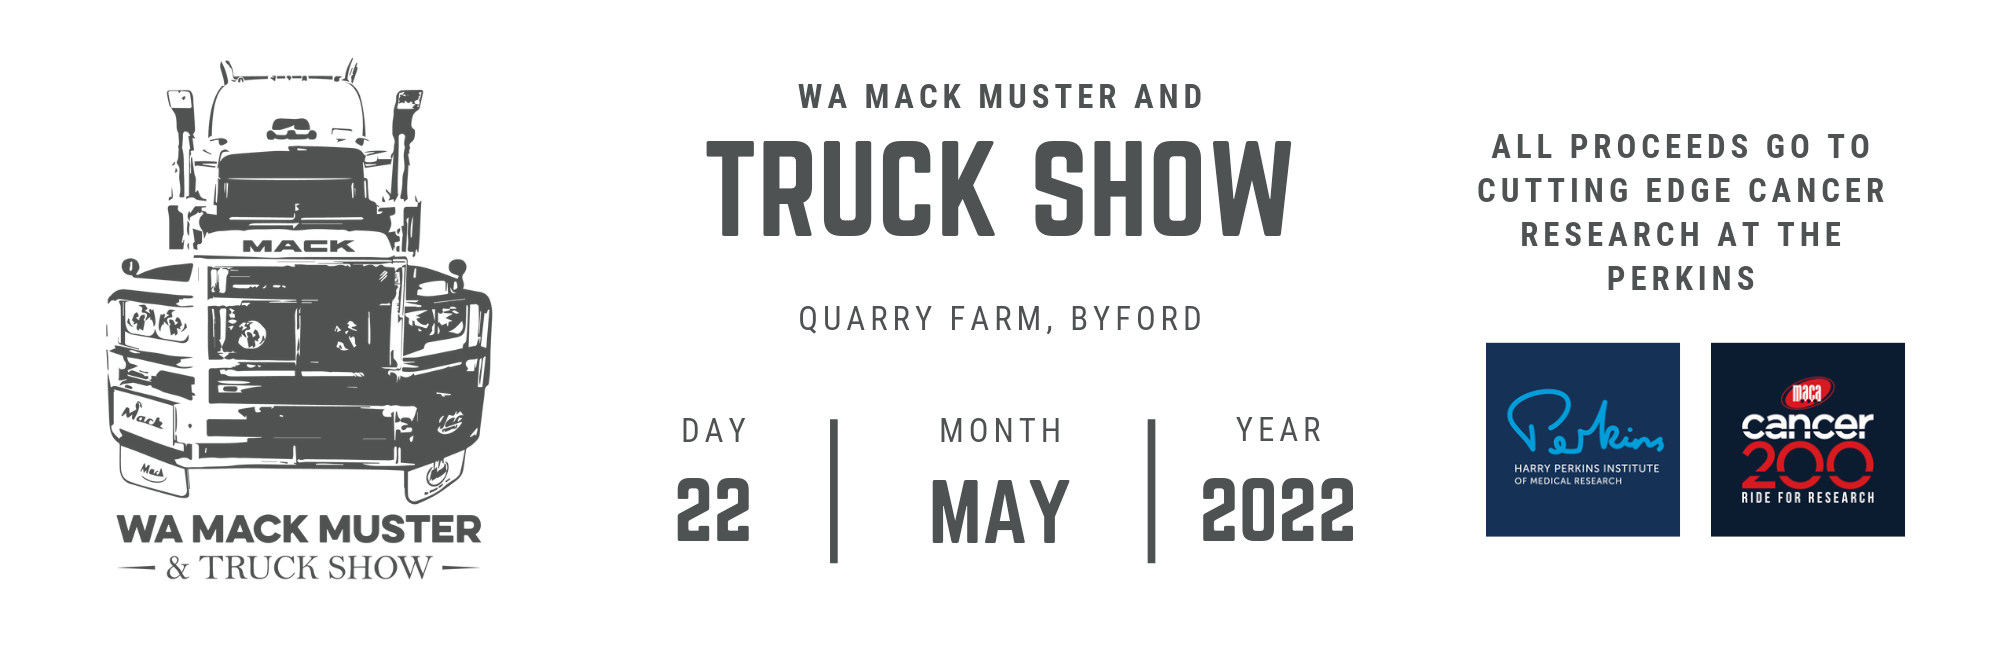 WA Mack Muster and Truck Show 2022 - Choicechem